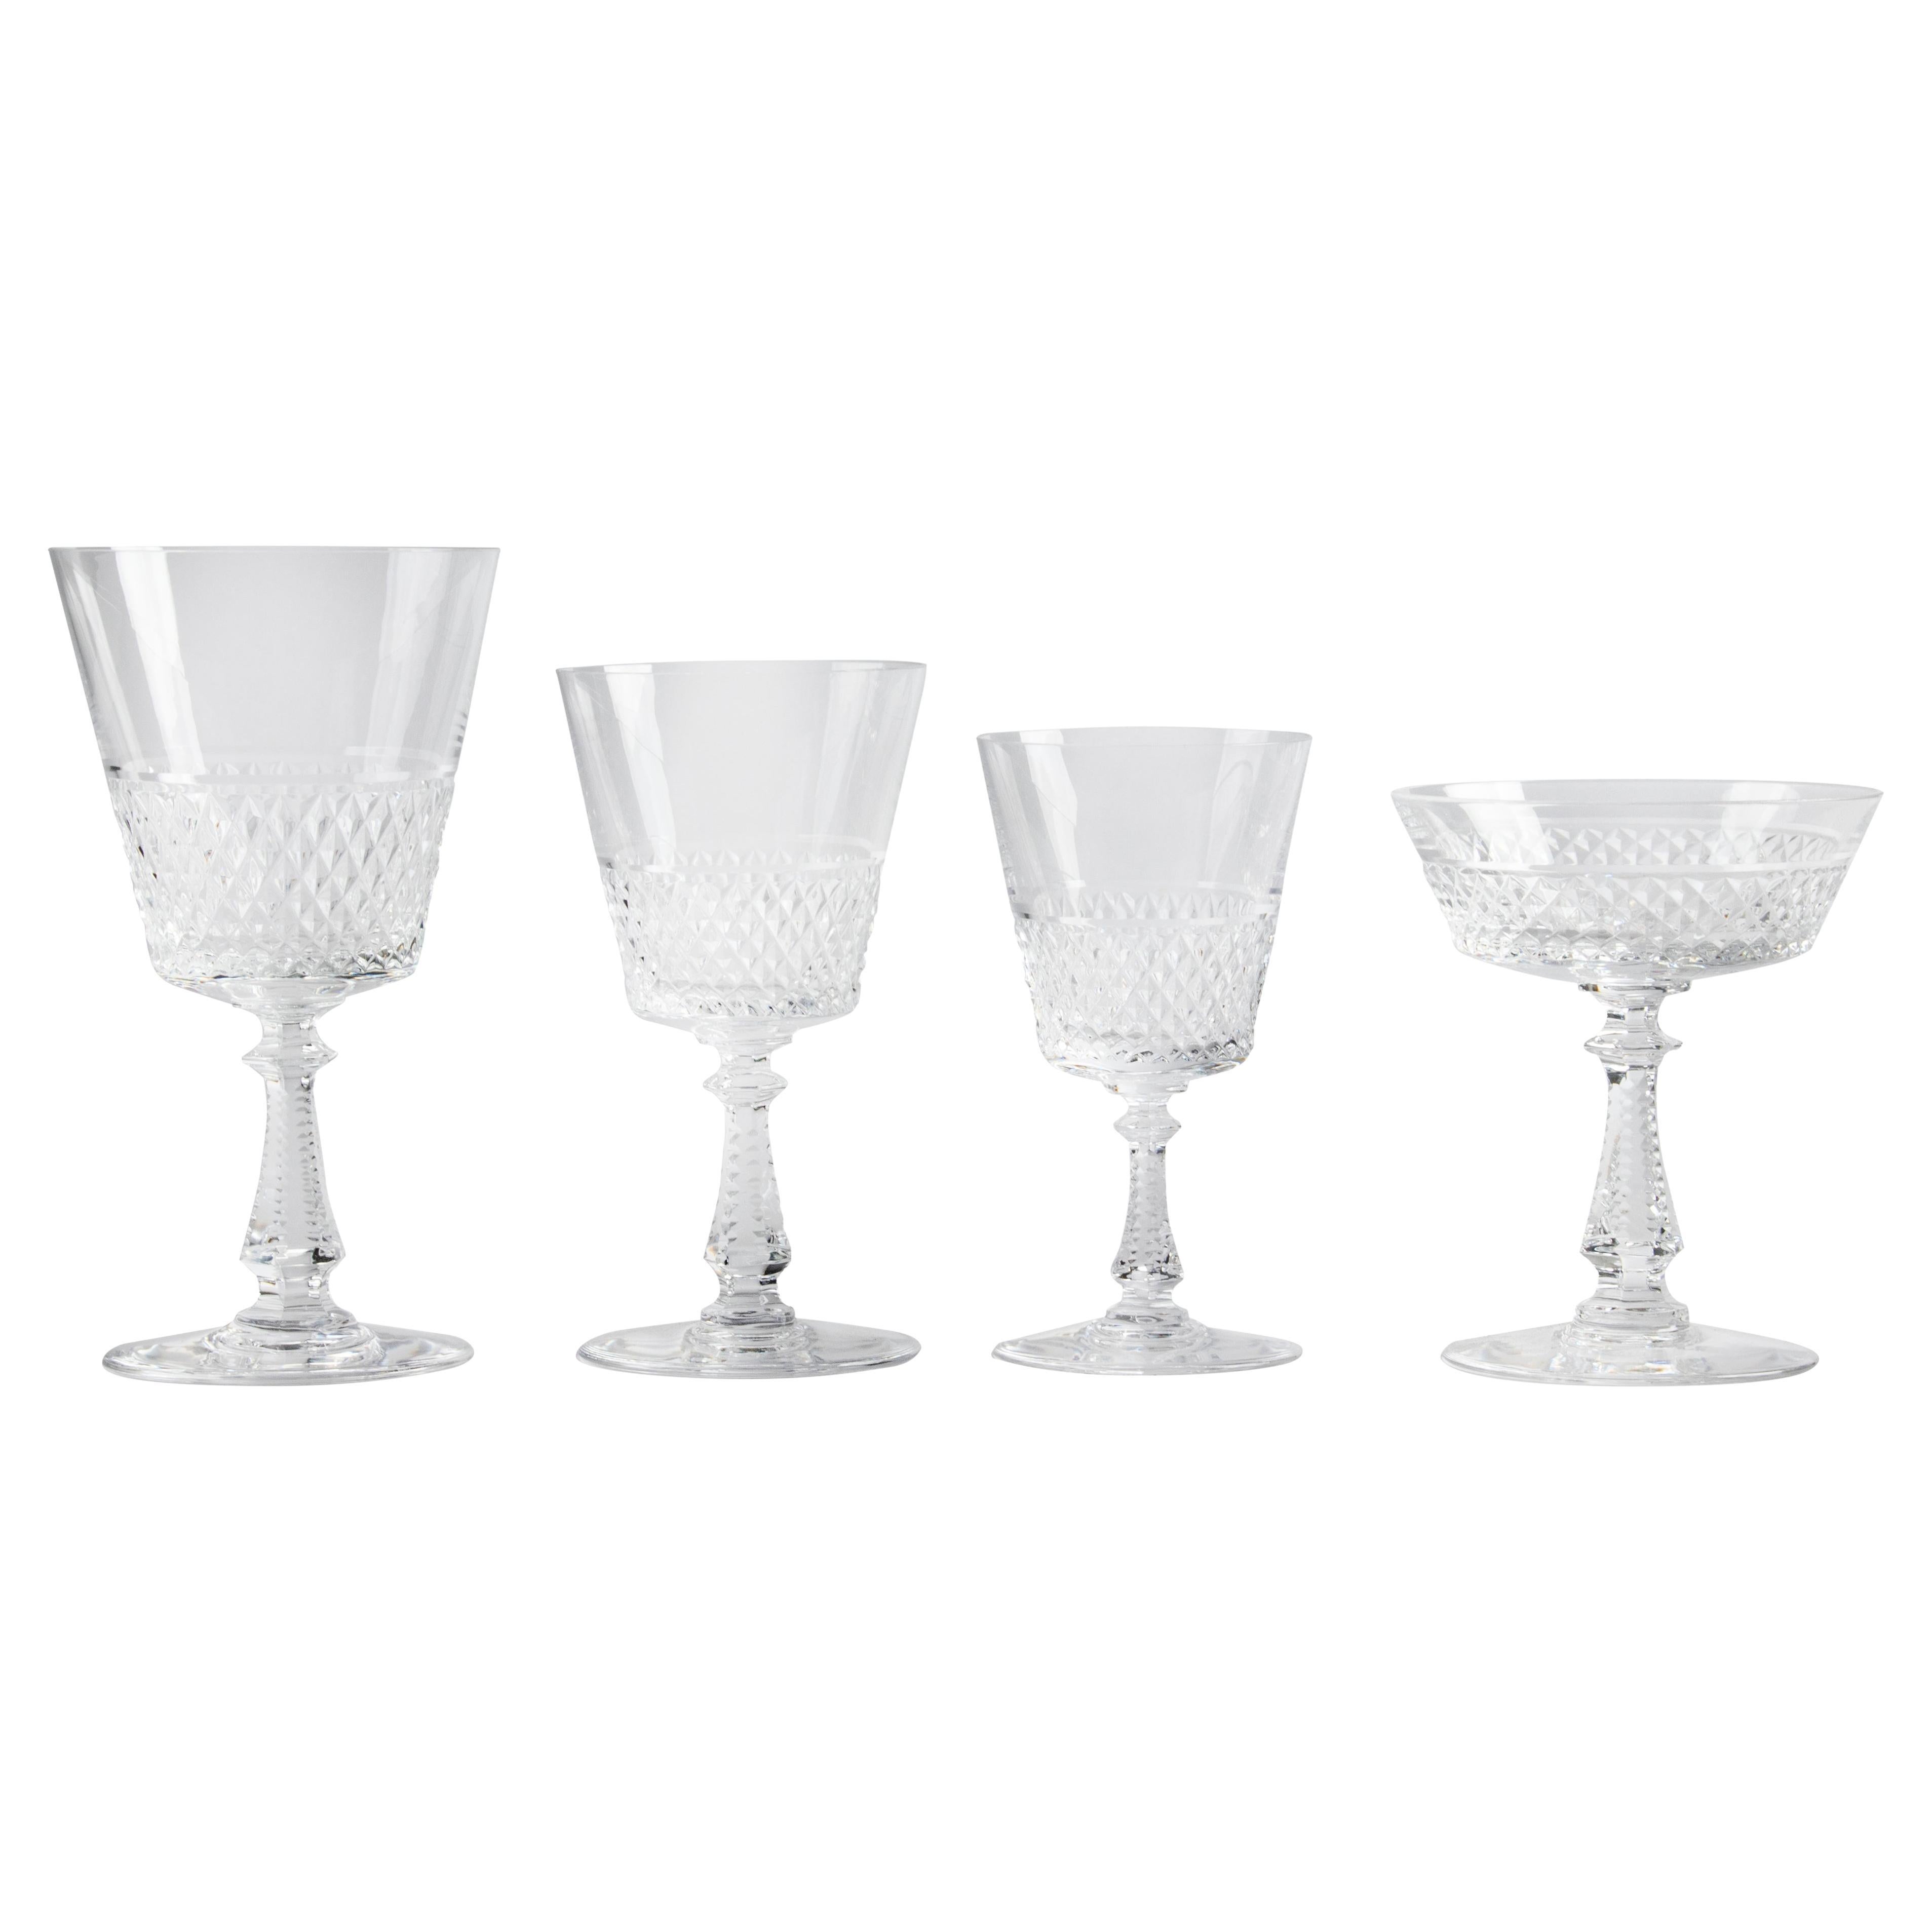 24-Piece Crystal Set of Glasses by Val Saint Lambert model Heidelberg